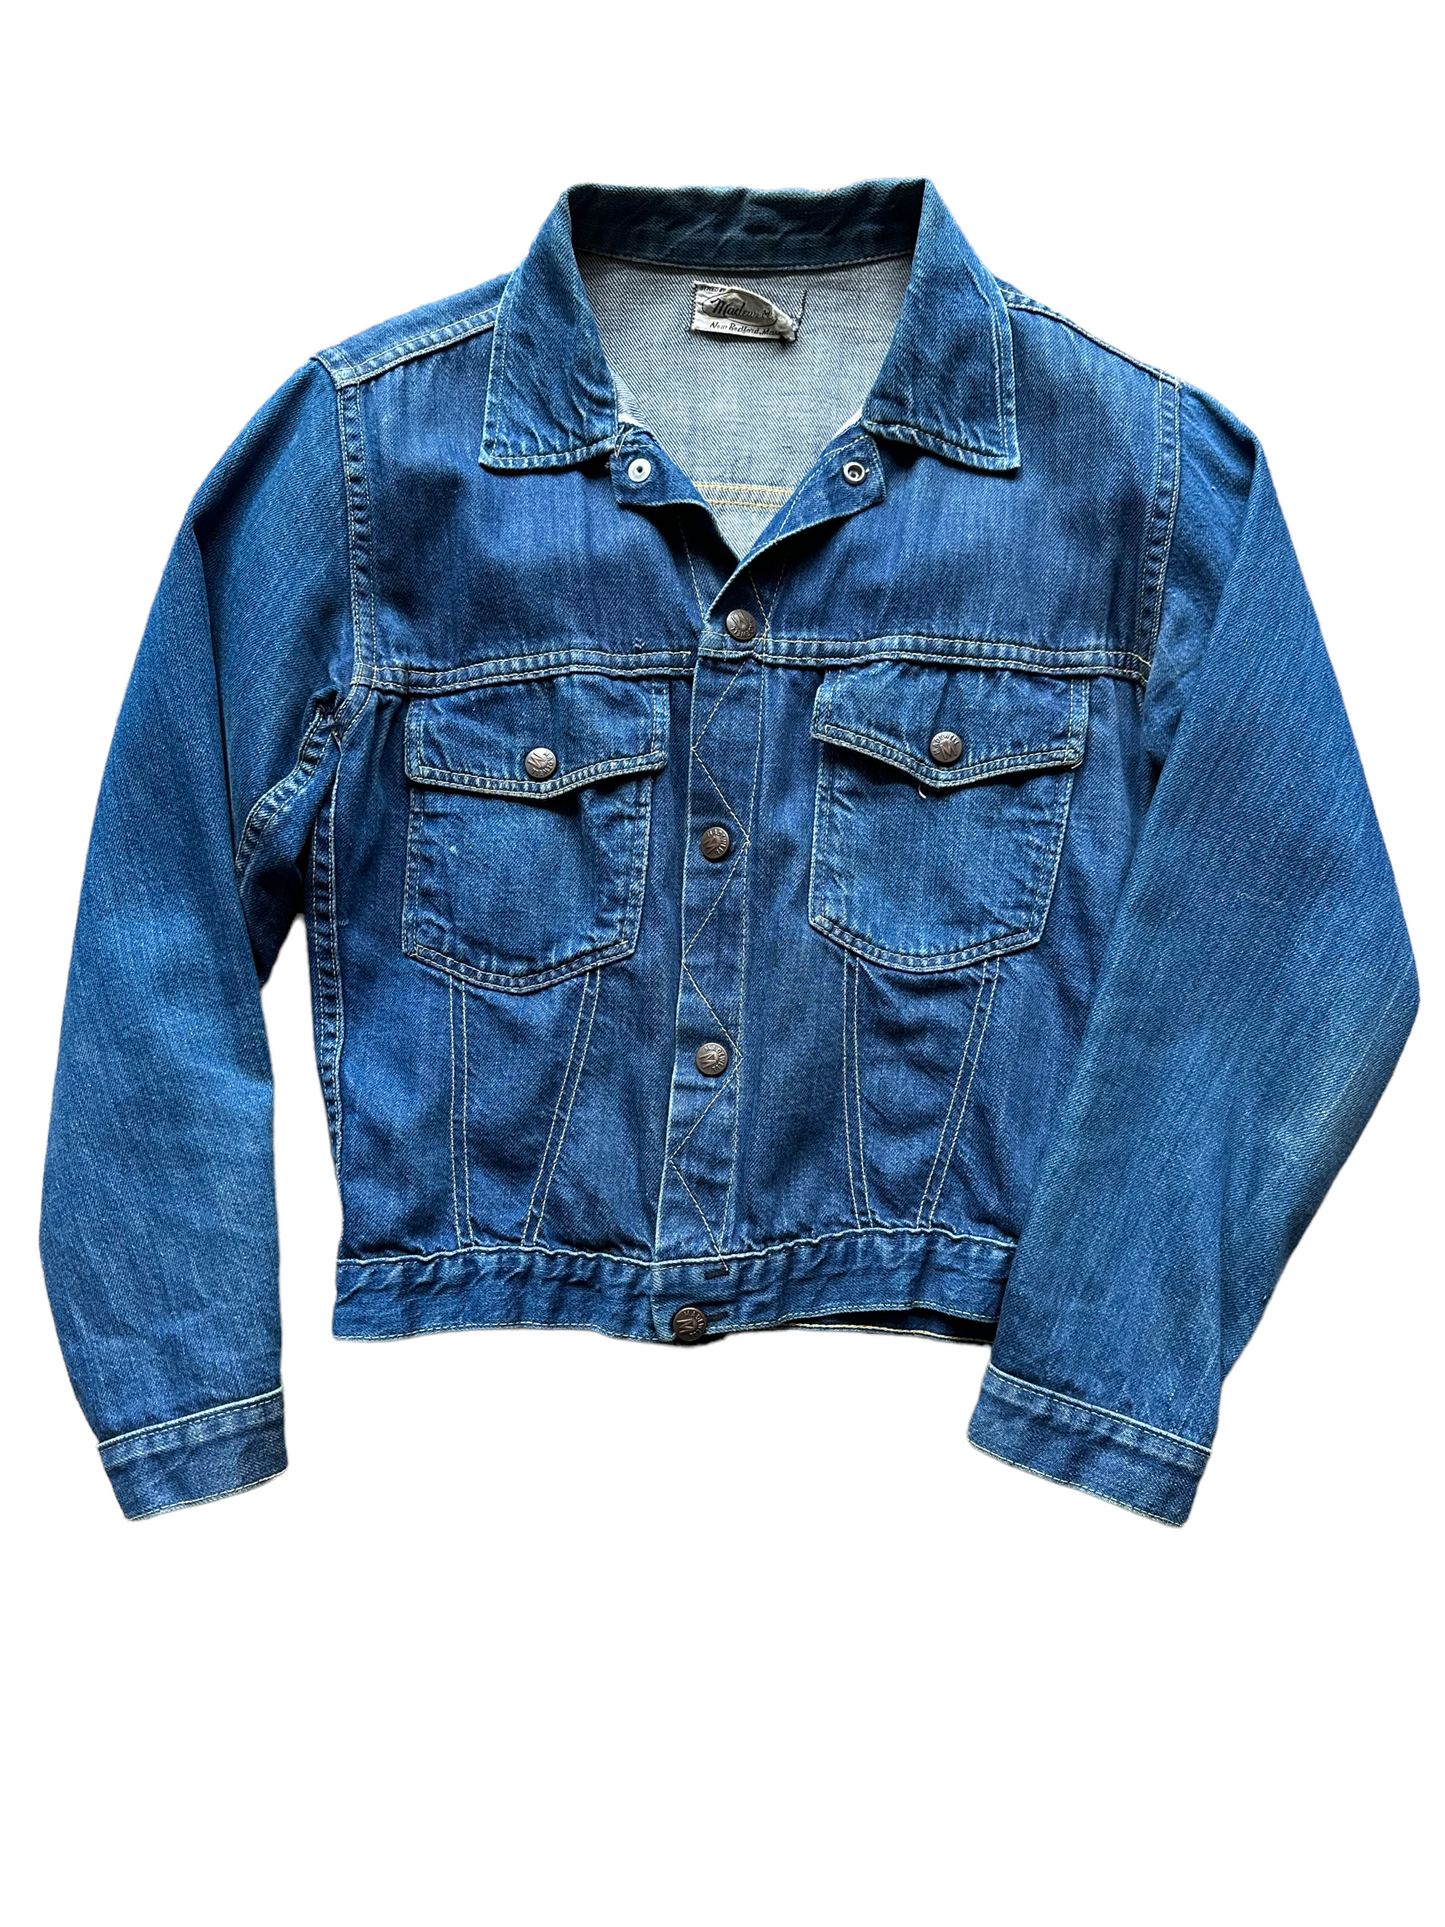 Front View of Vintage Madewell Selvedge Denim Jacket | Barn Owl Vintage | Seattle Vintage Denim Workwear Clothing